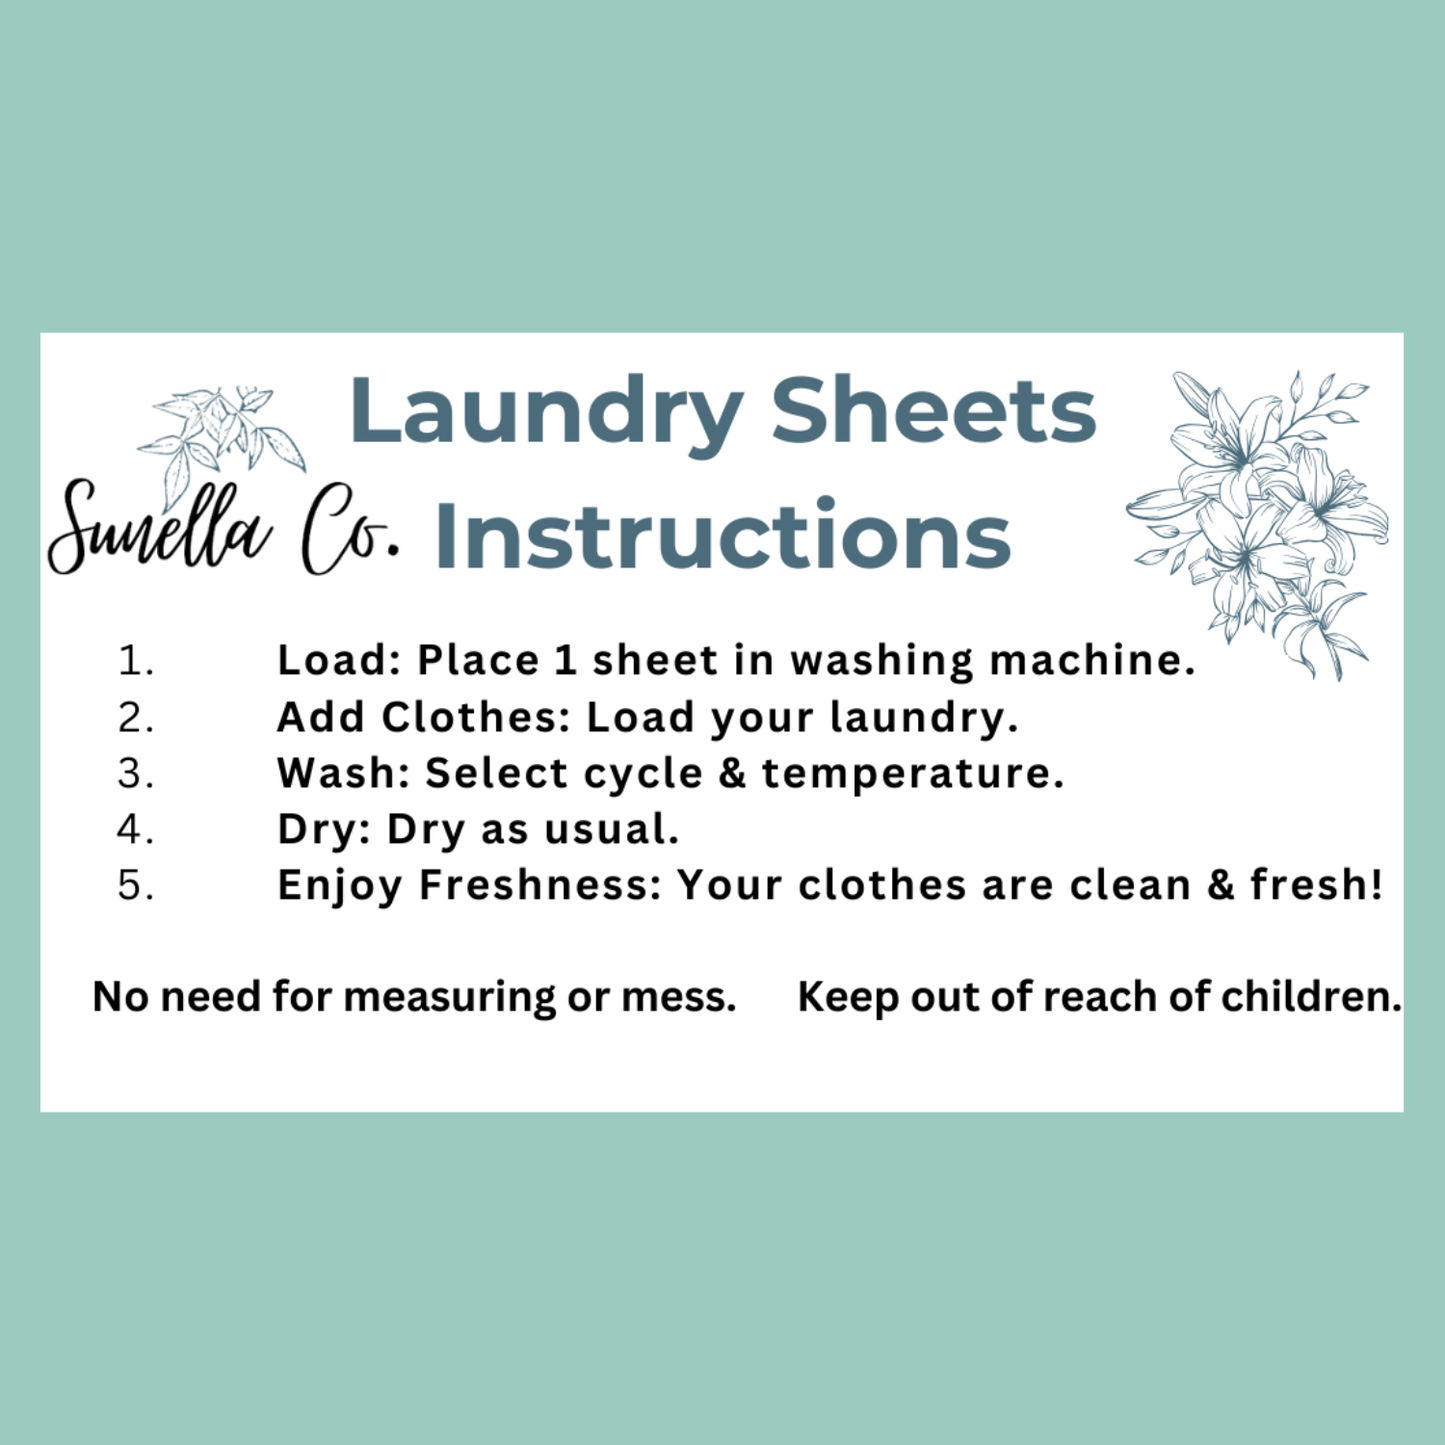 Laundry Detergent Sheets: Fresh Linen